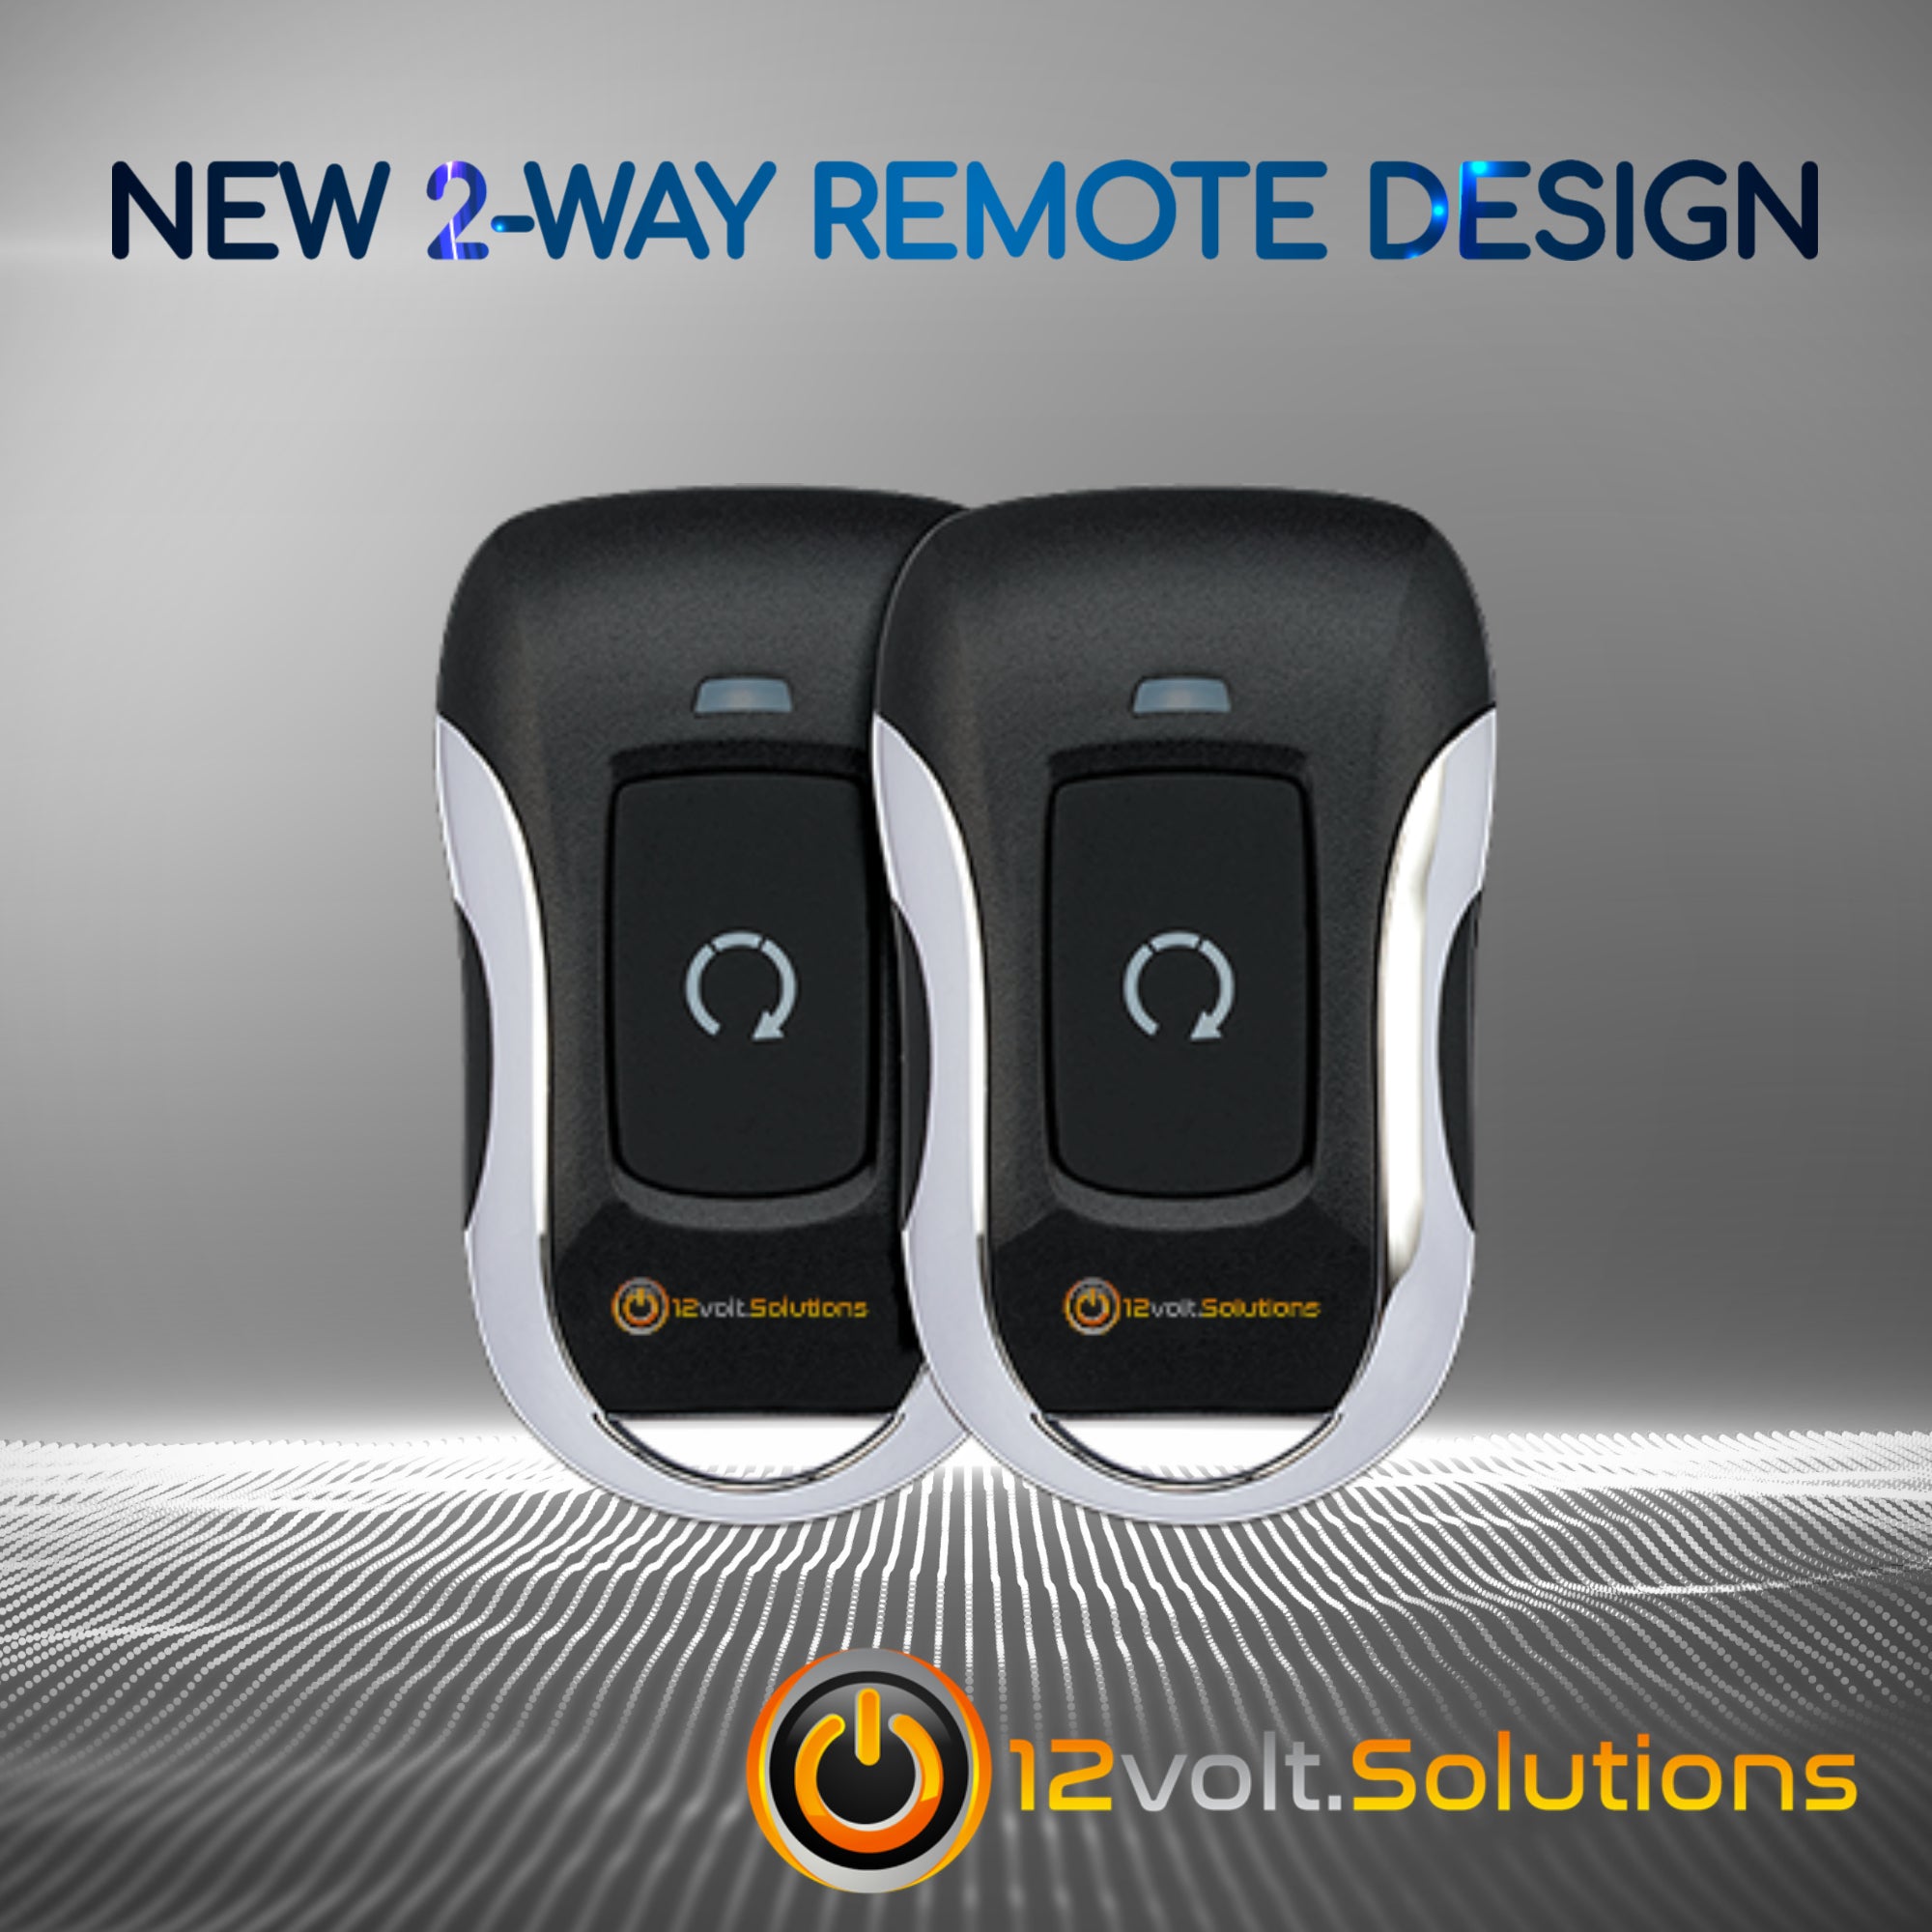 2017-2022 Chevrolet Colorado Plug & Play Remote Start Kit (Key Start)-12Volt.Solutions